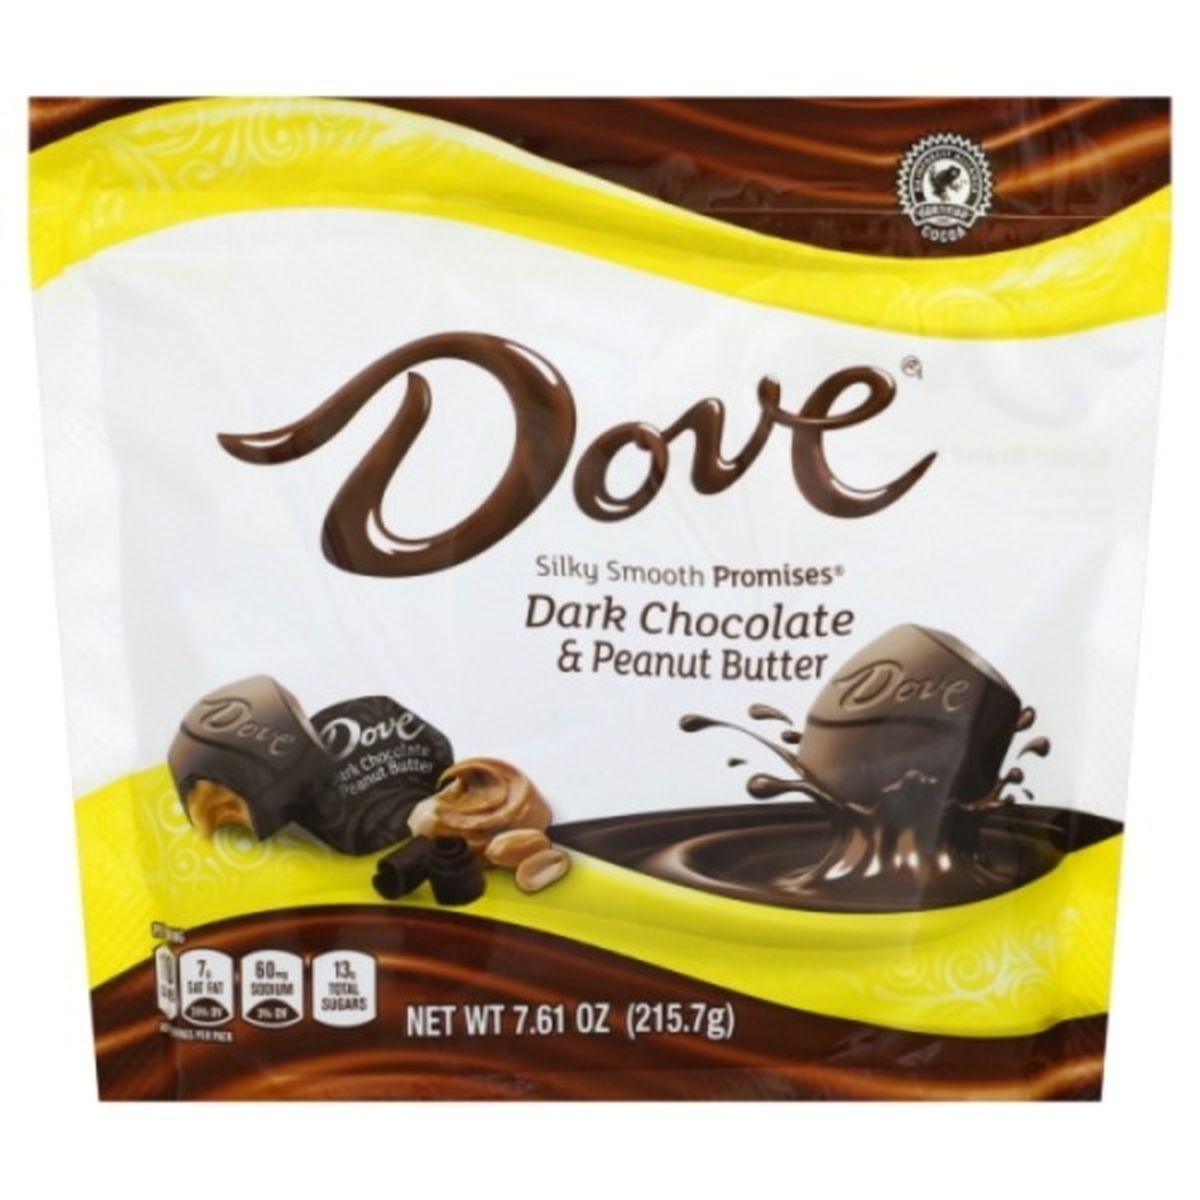 Calories in Dove Dark Chocolate, & Peanut Butter